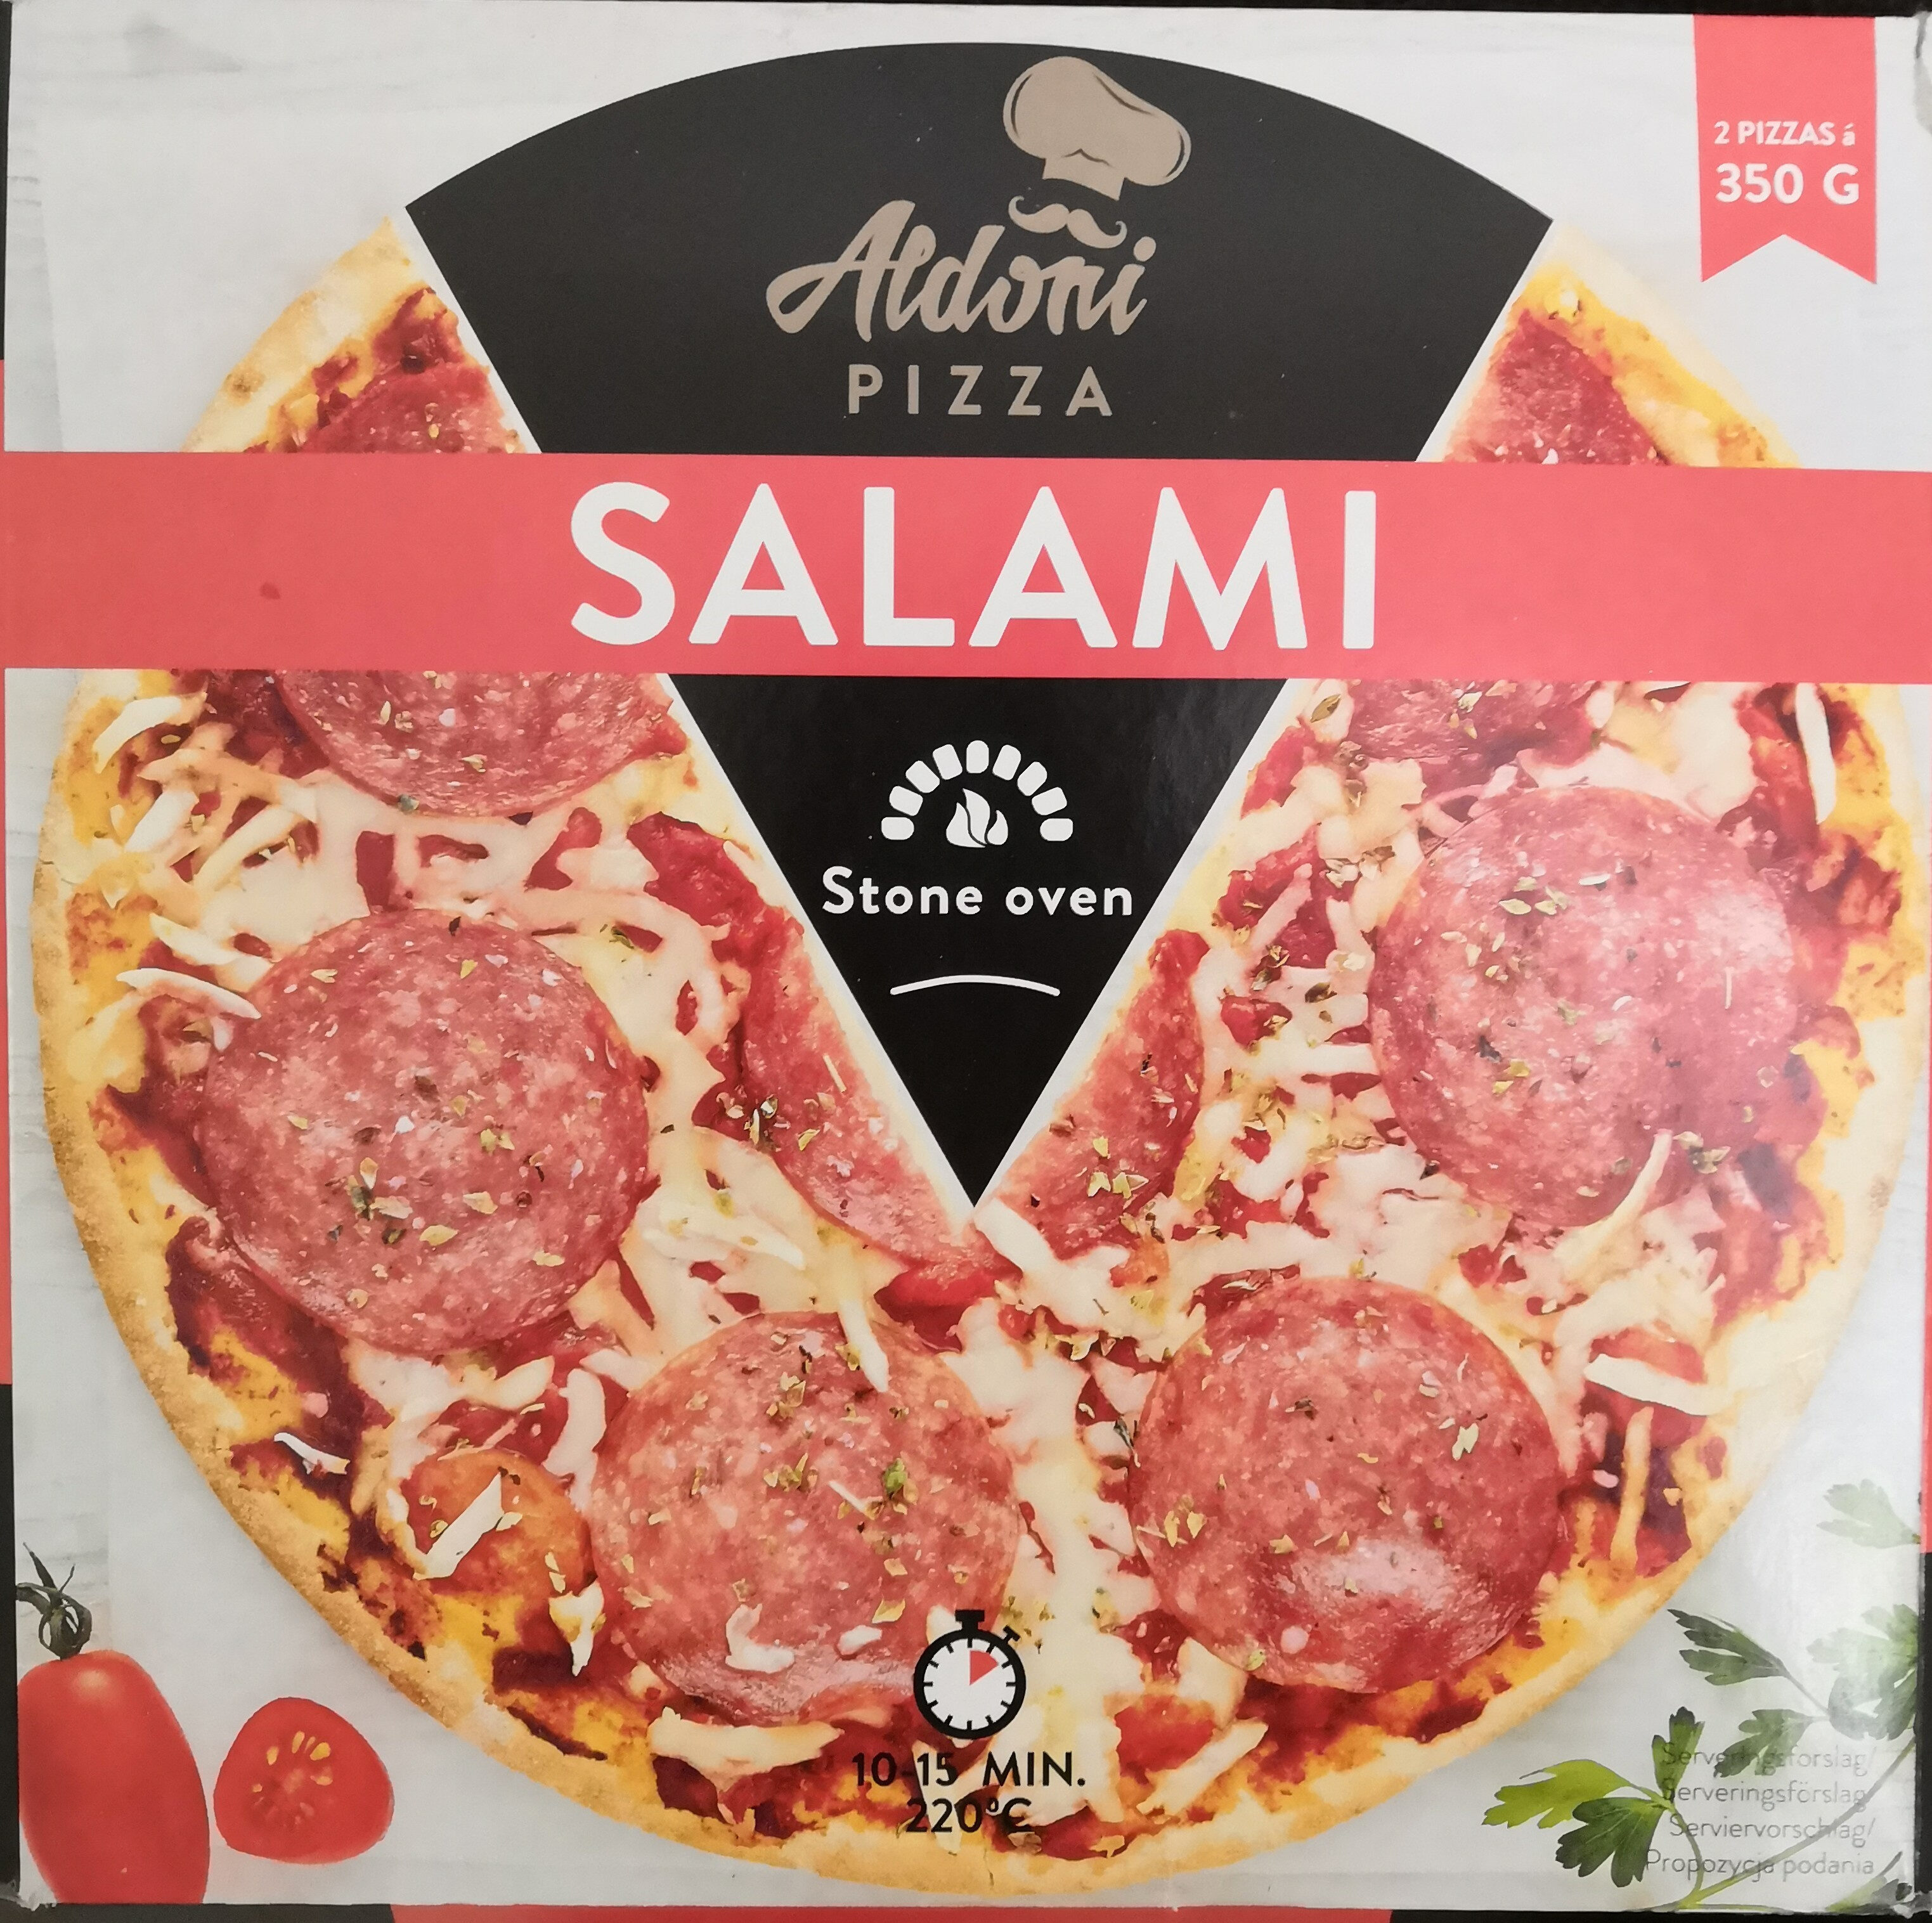 Aldoni Stone Oven Pizza Salami - Produkt